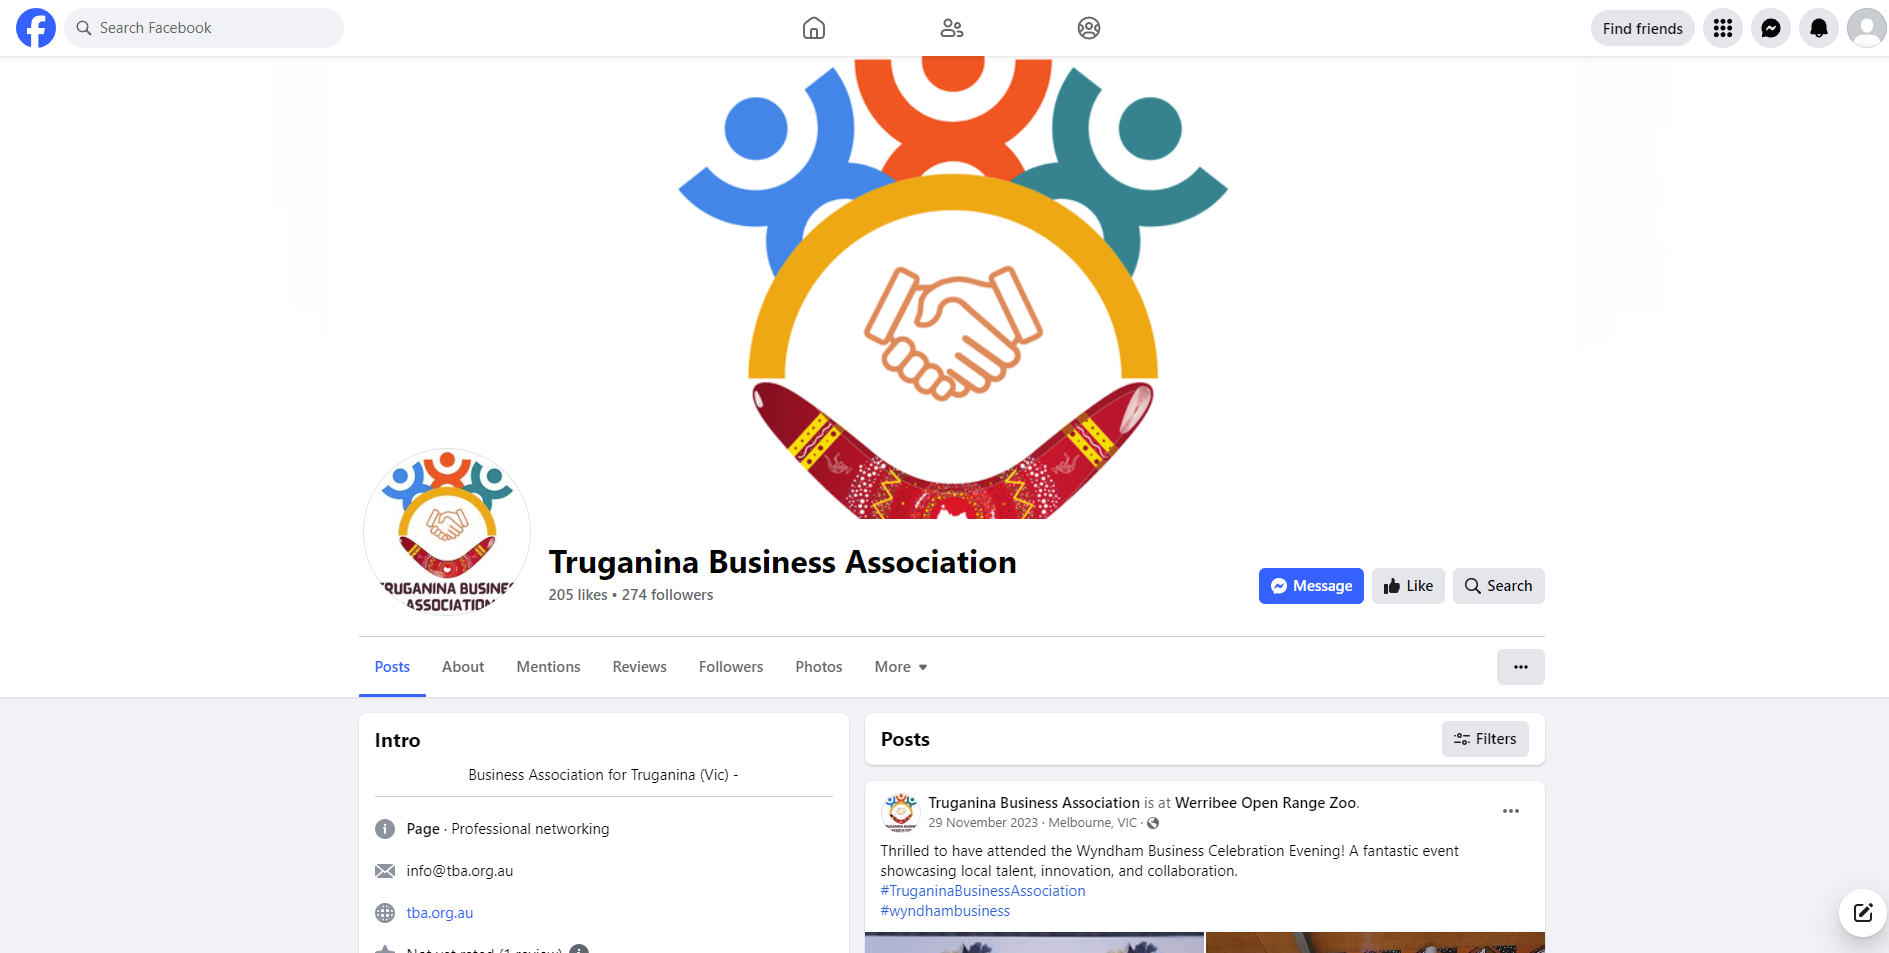 Truganina Business Association